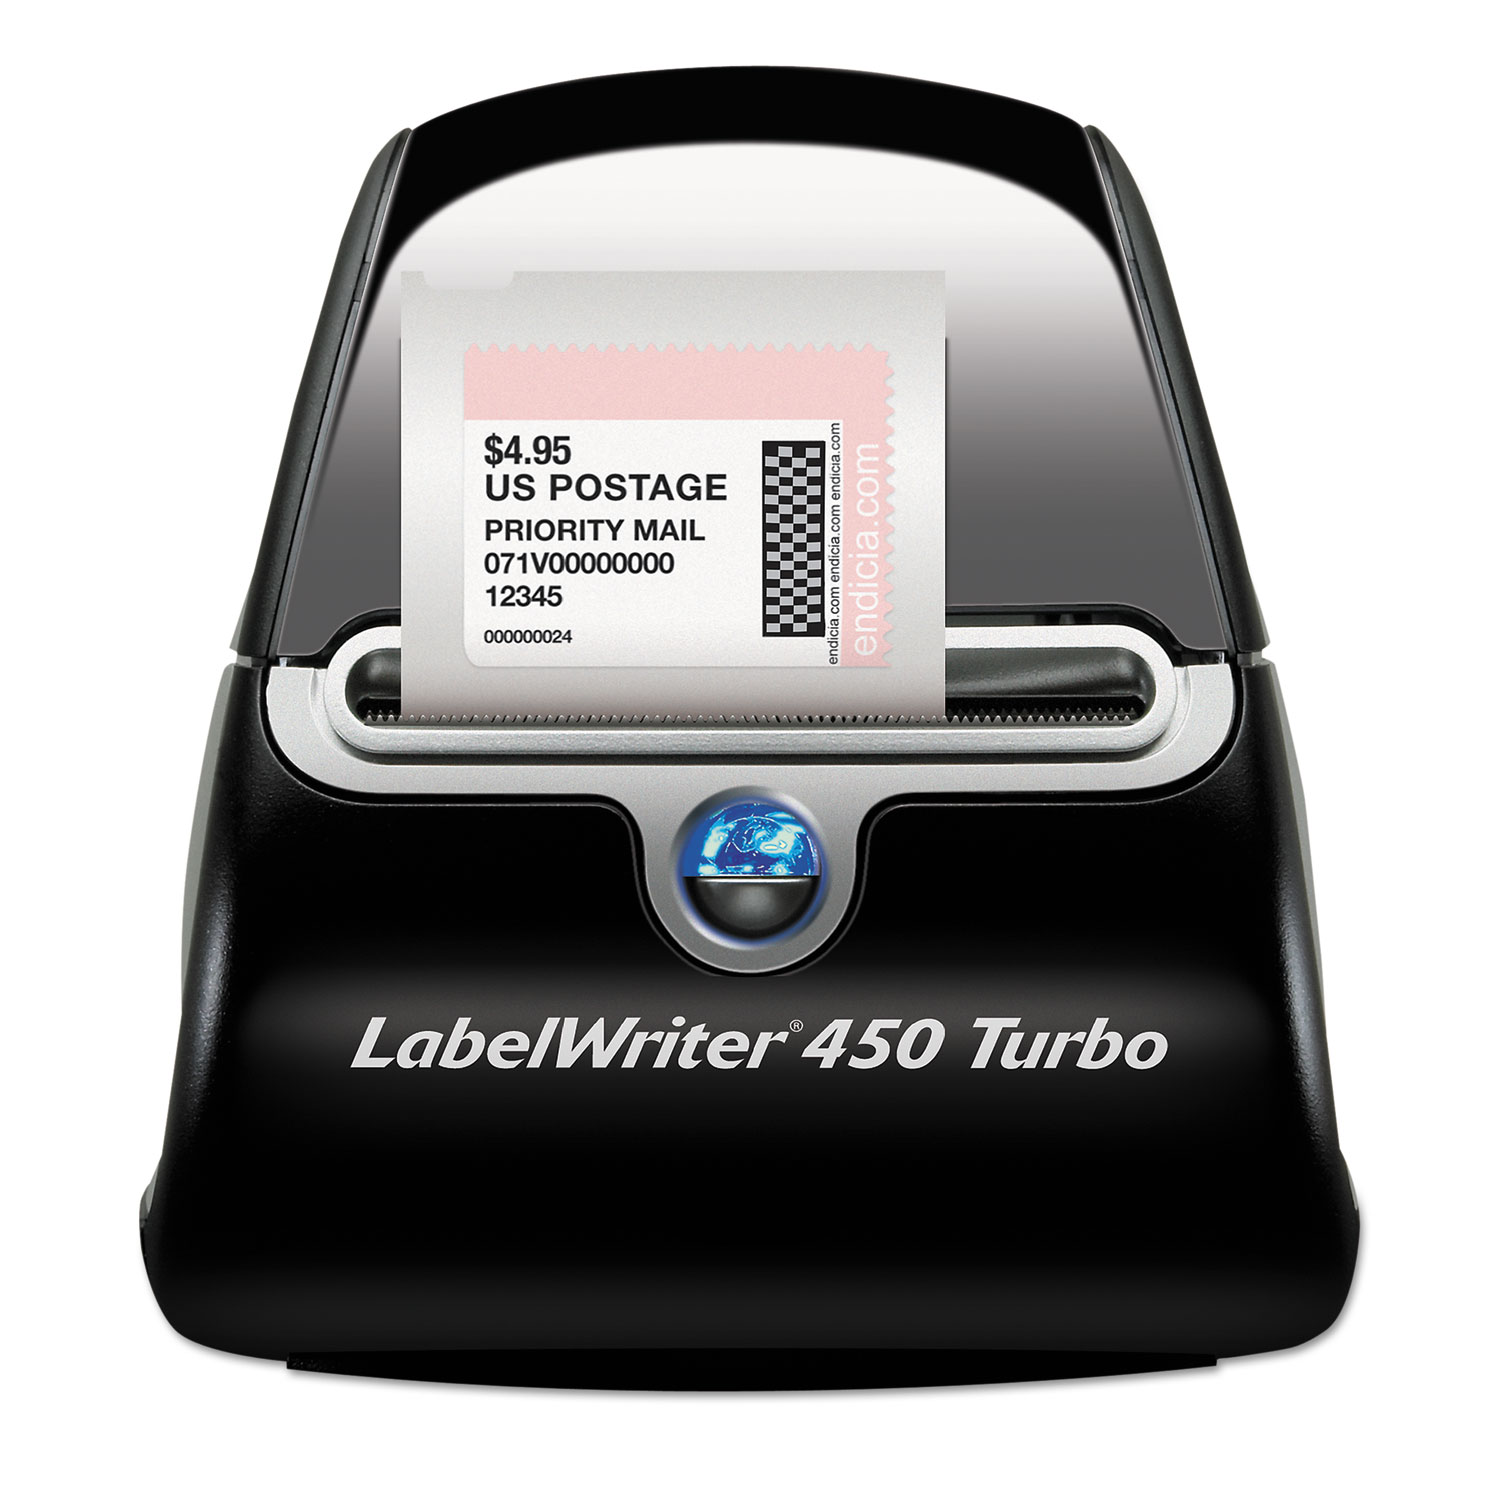  DYMO 1752265 LabelWriter 450 Turbo Printer, 71 Label/Min, 5w x 7.4d x 5.5h (DYM1752265) 